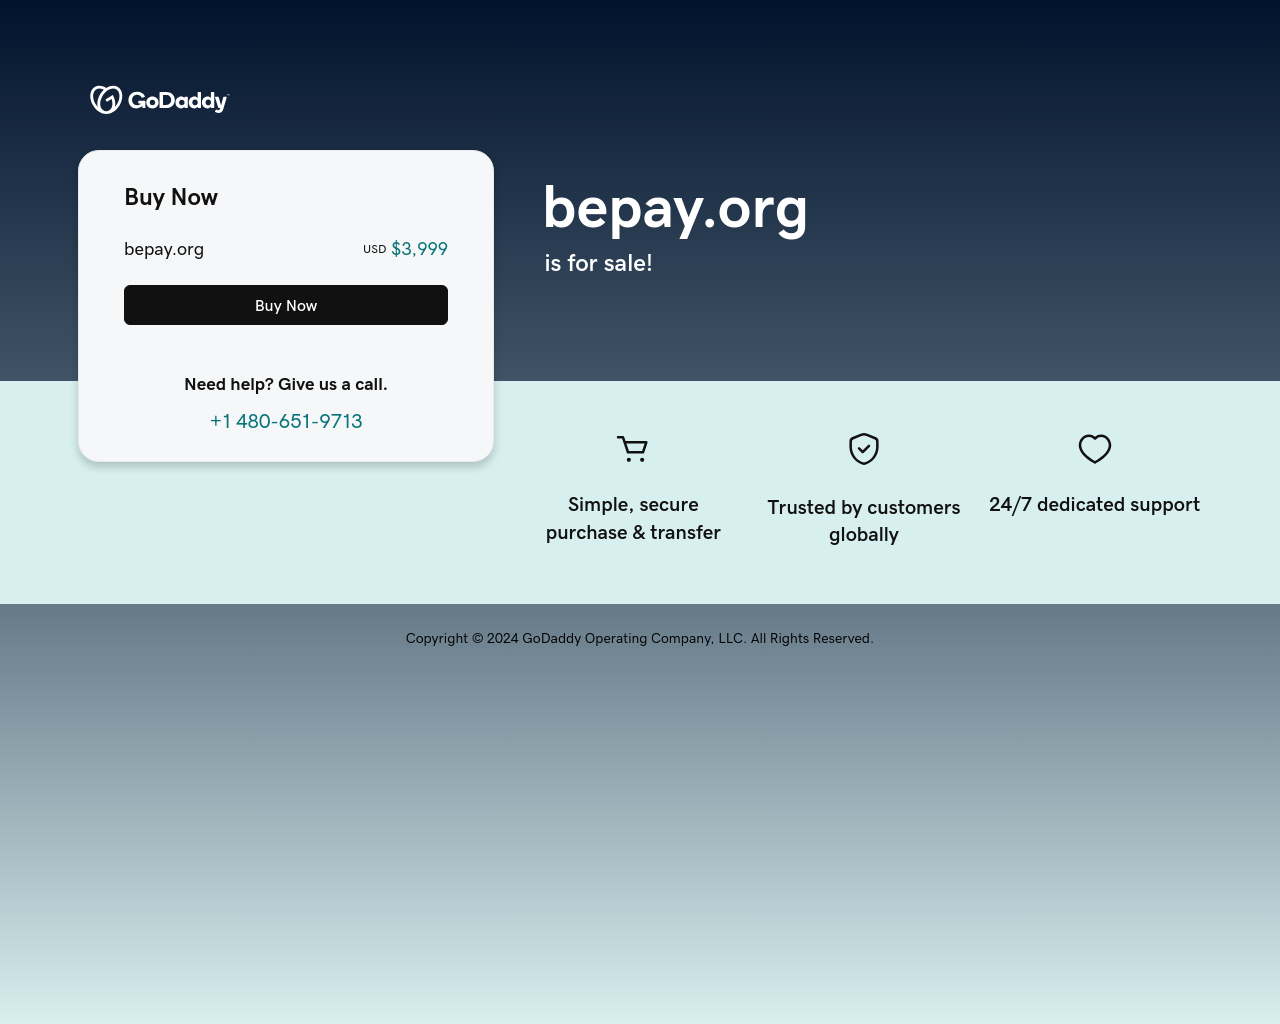 bepay.org